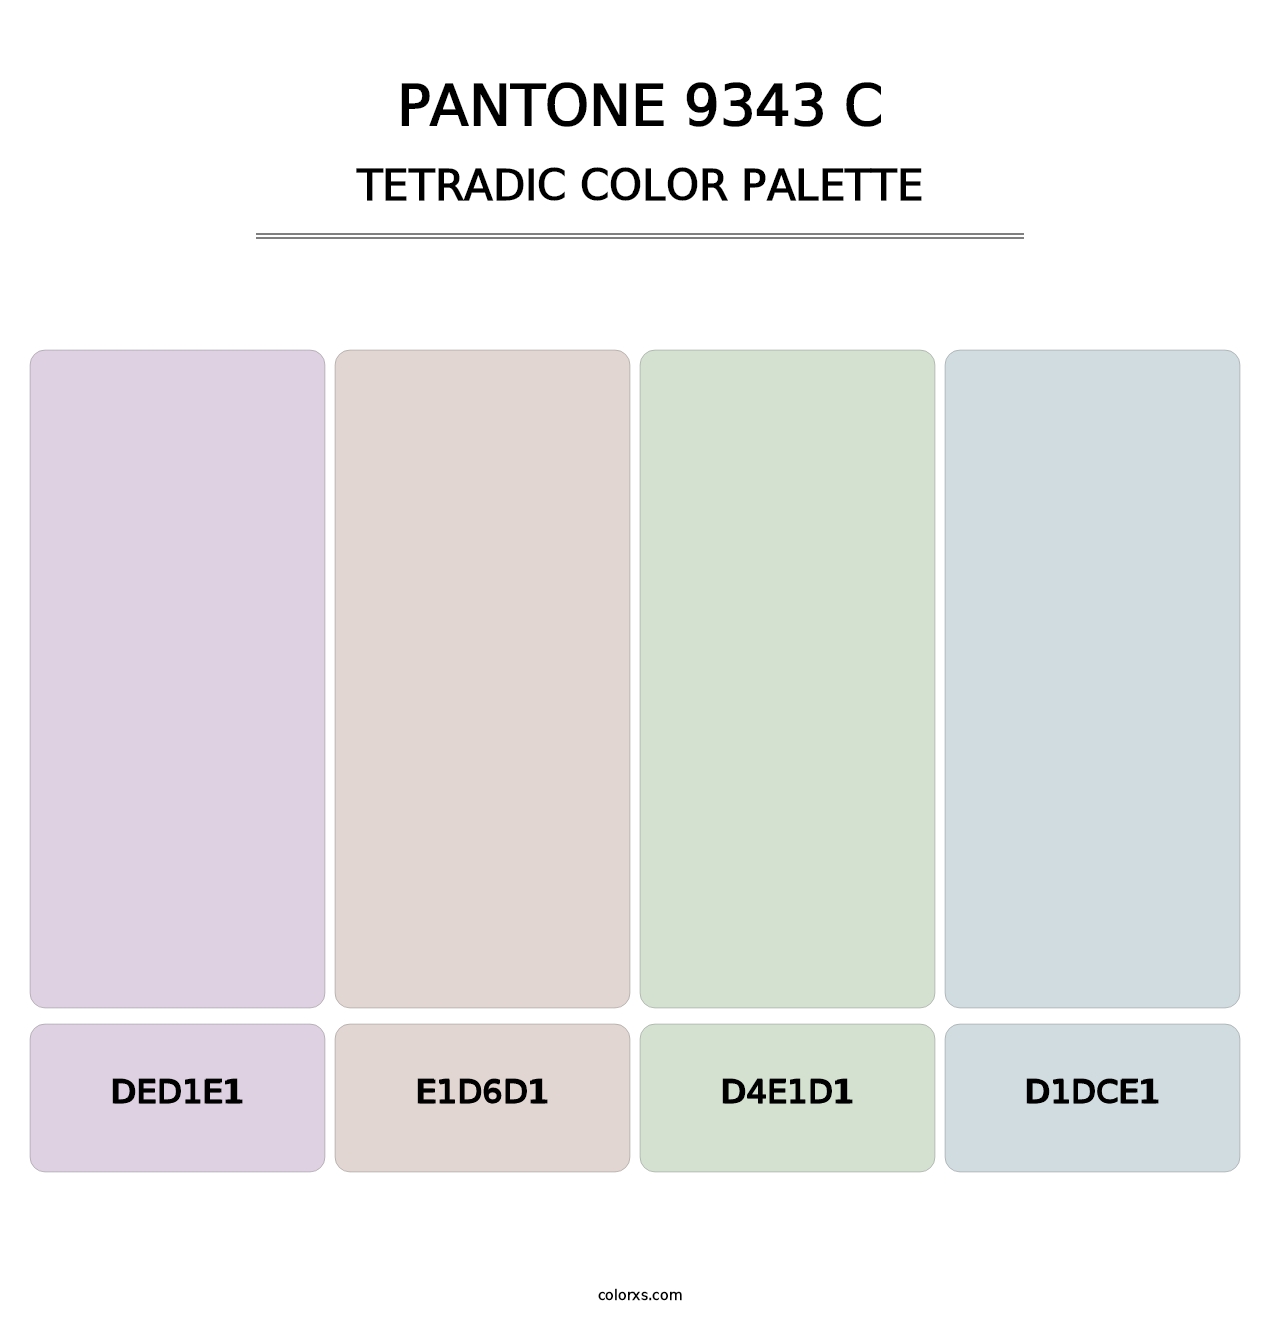 PANTONE 9343 C - Tetradic Color Palette